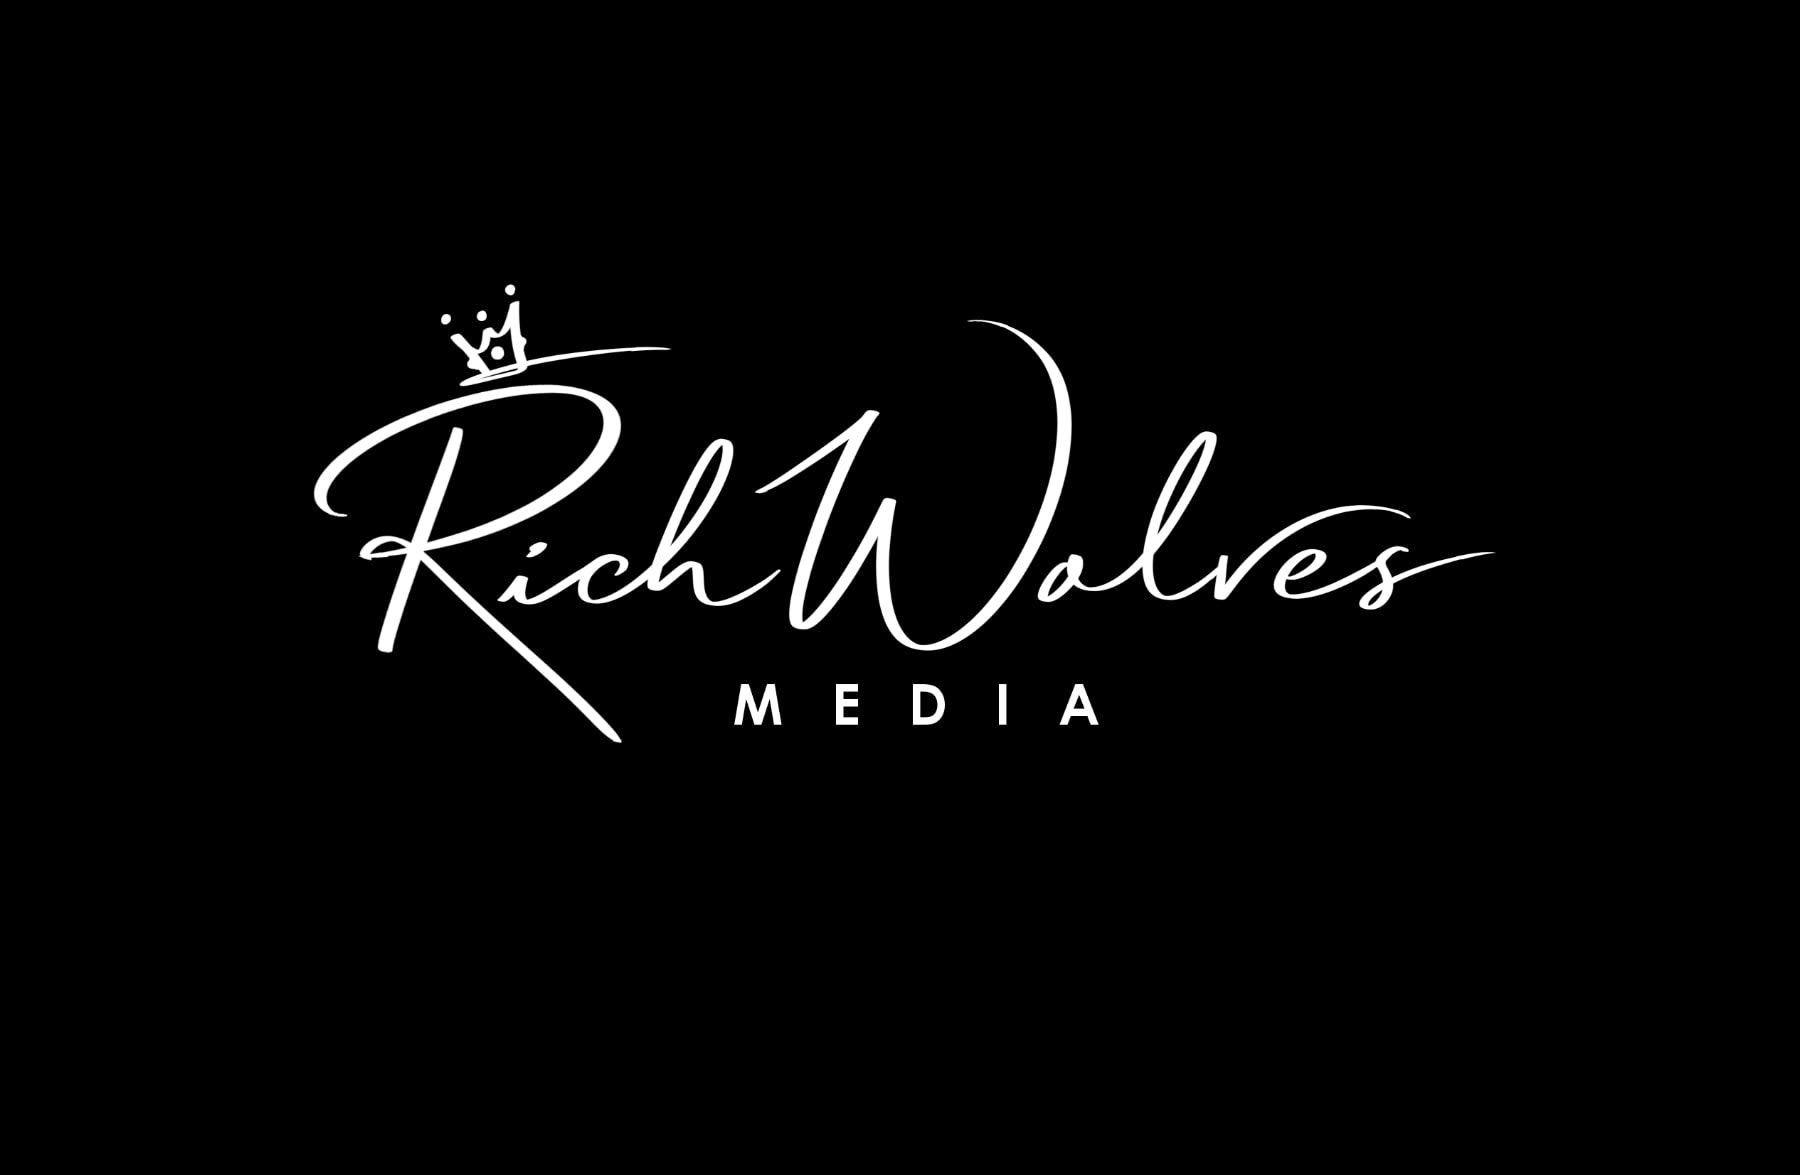 Rich Wolves Media